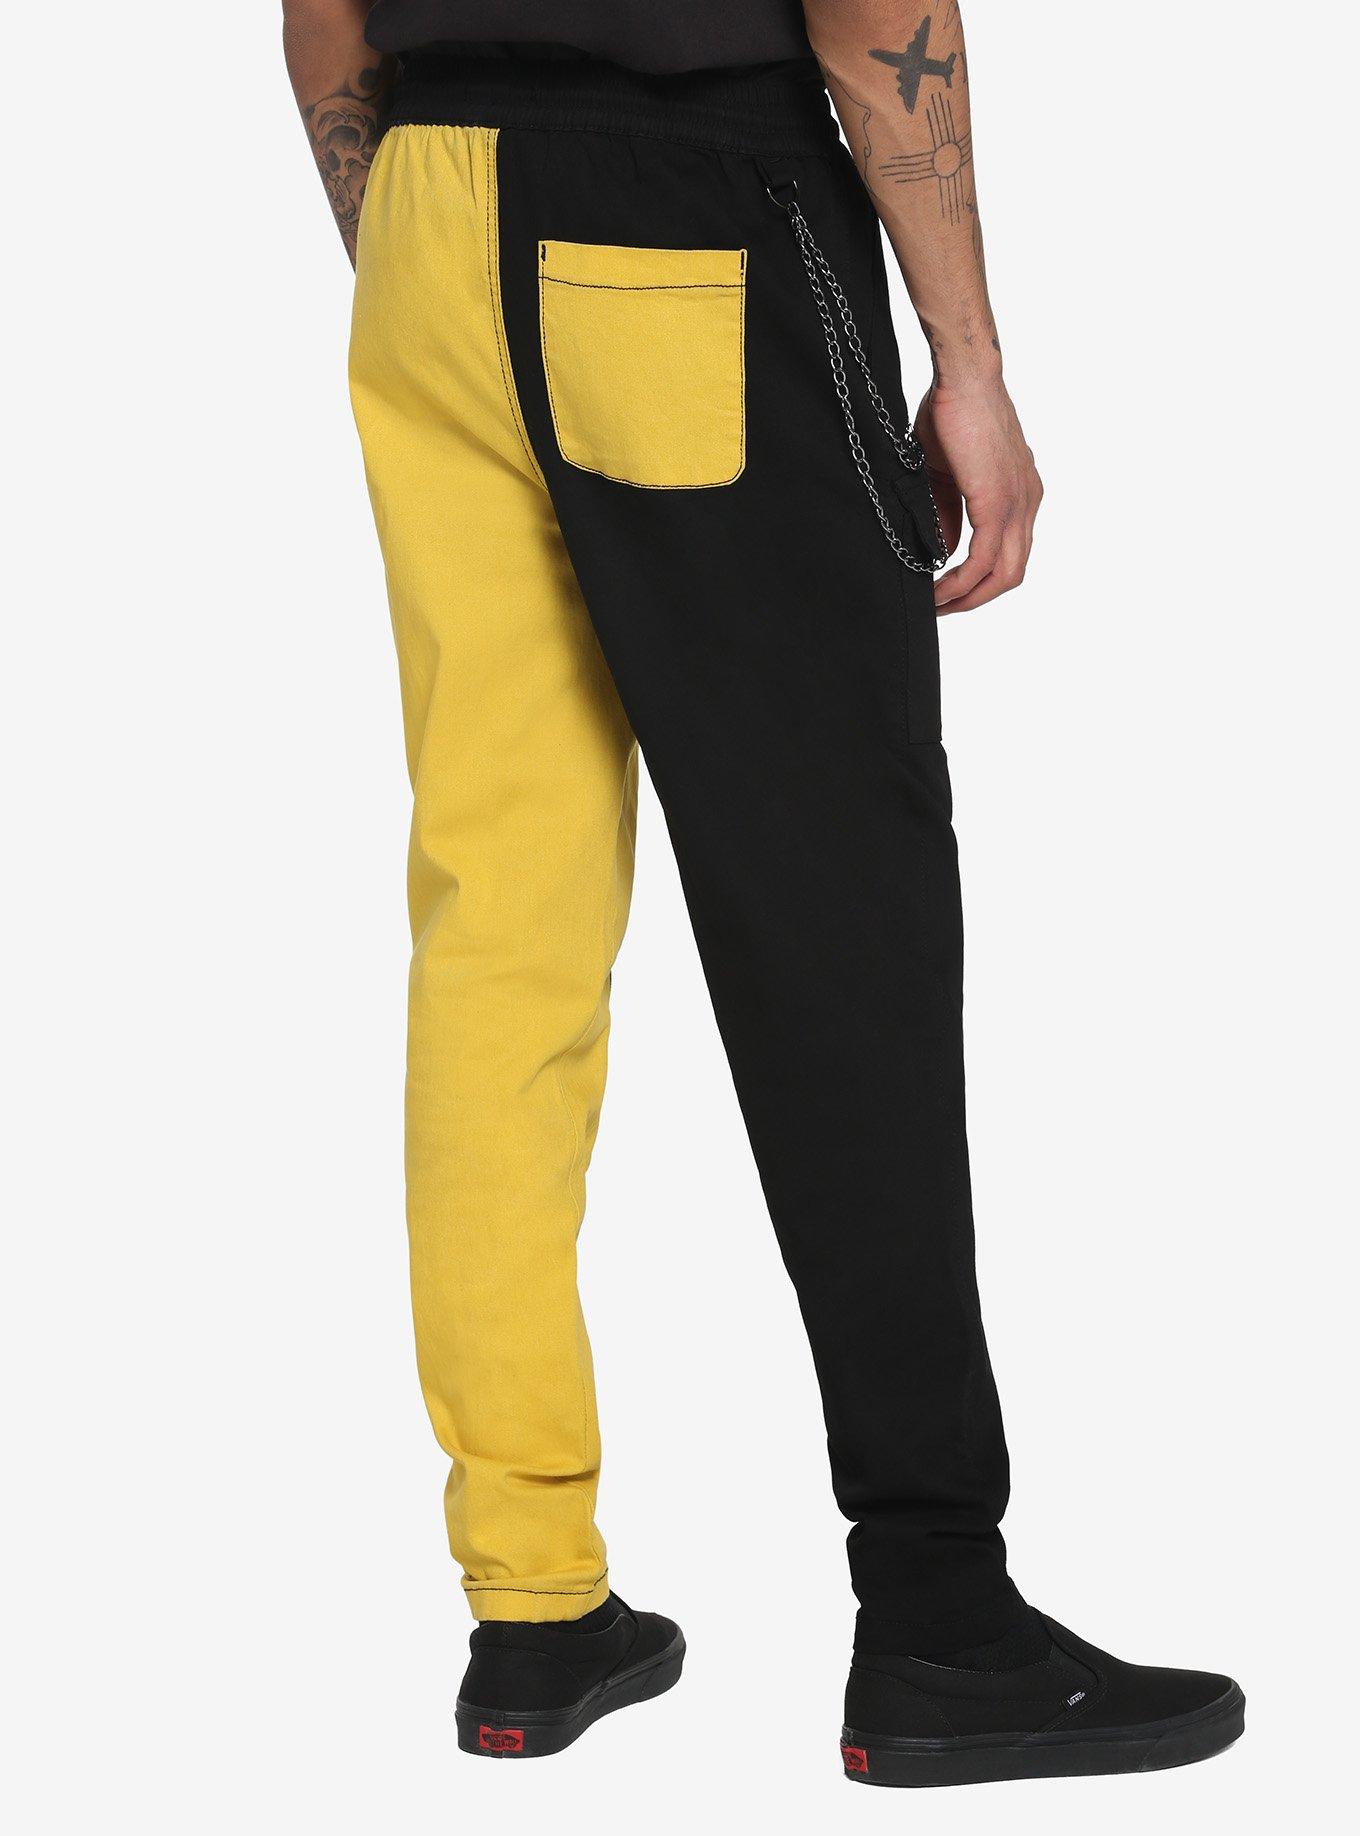 Black & Yellow Split Jogger Pants, BLACK  RED, alternate